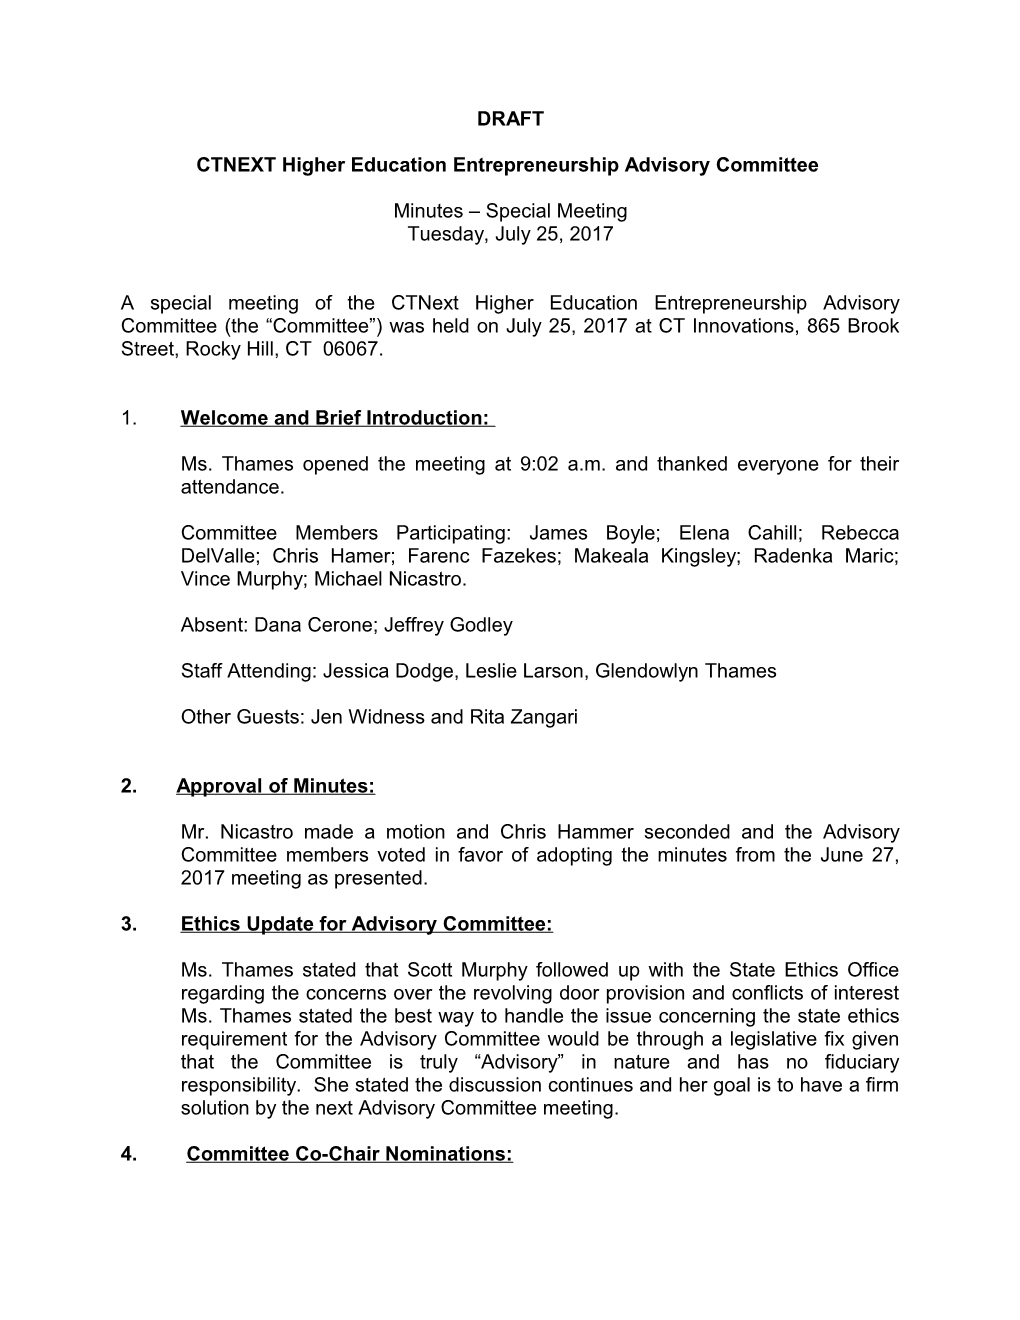 CTNEXT Higher Education Entrepreneurshipadvisory Committee